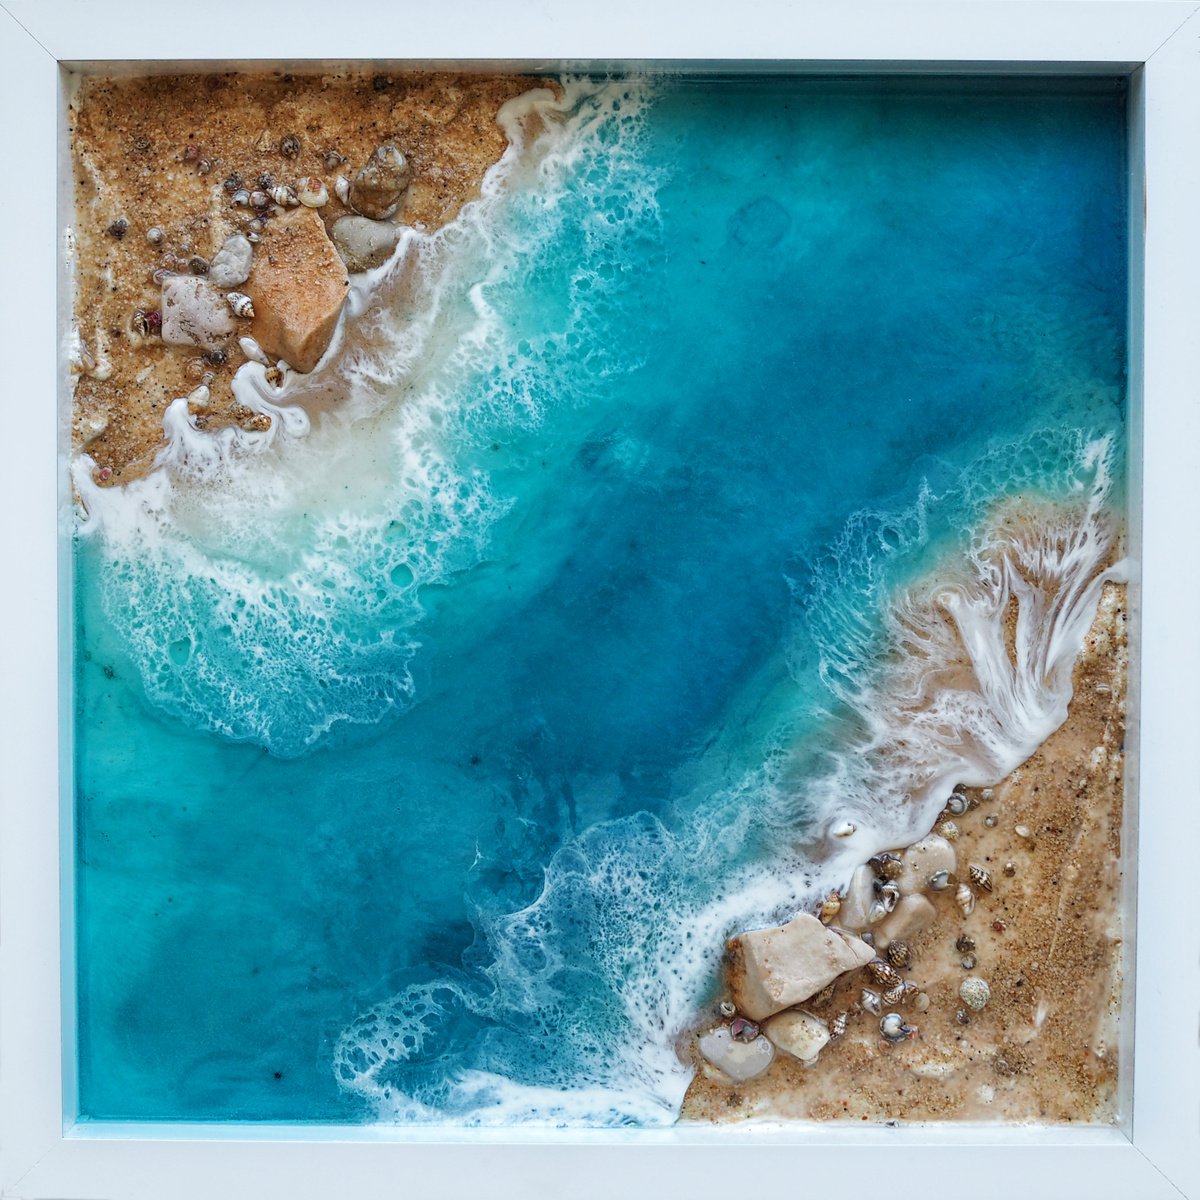 Meditation box with sea #4 - original seascape 3d artwork, framed, ready to hang by Delnara El